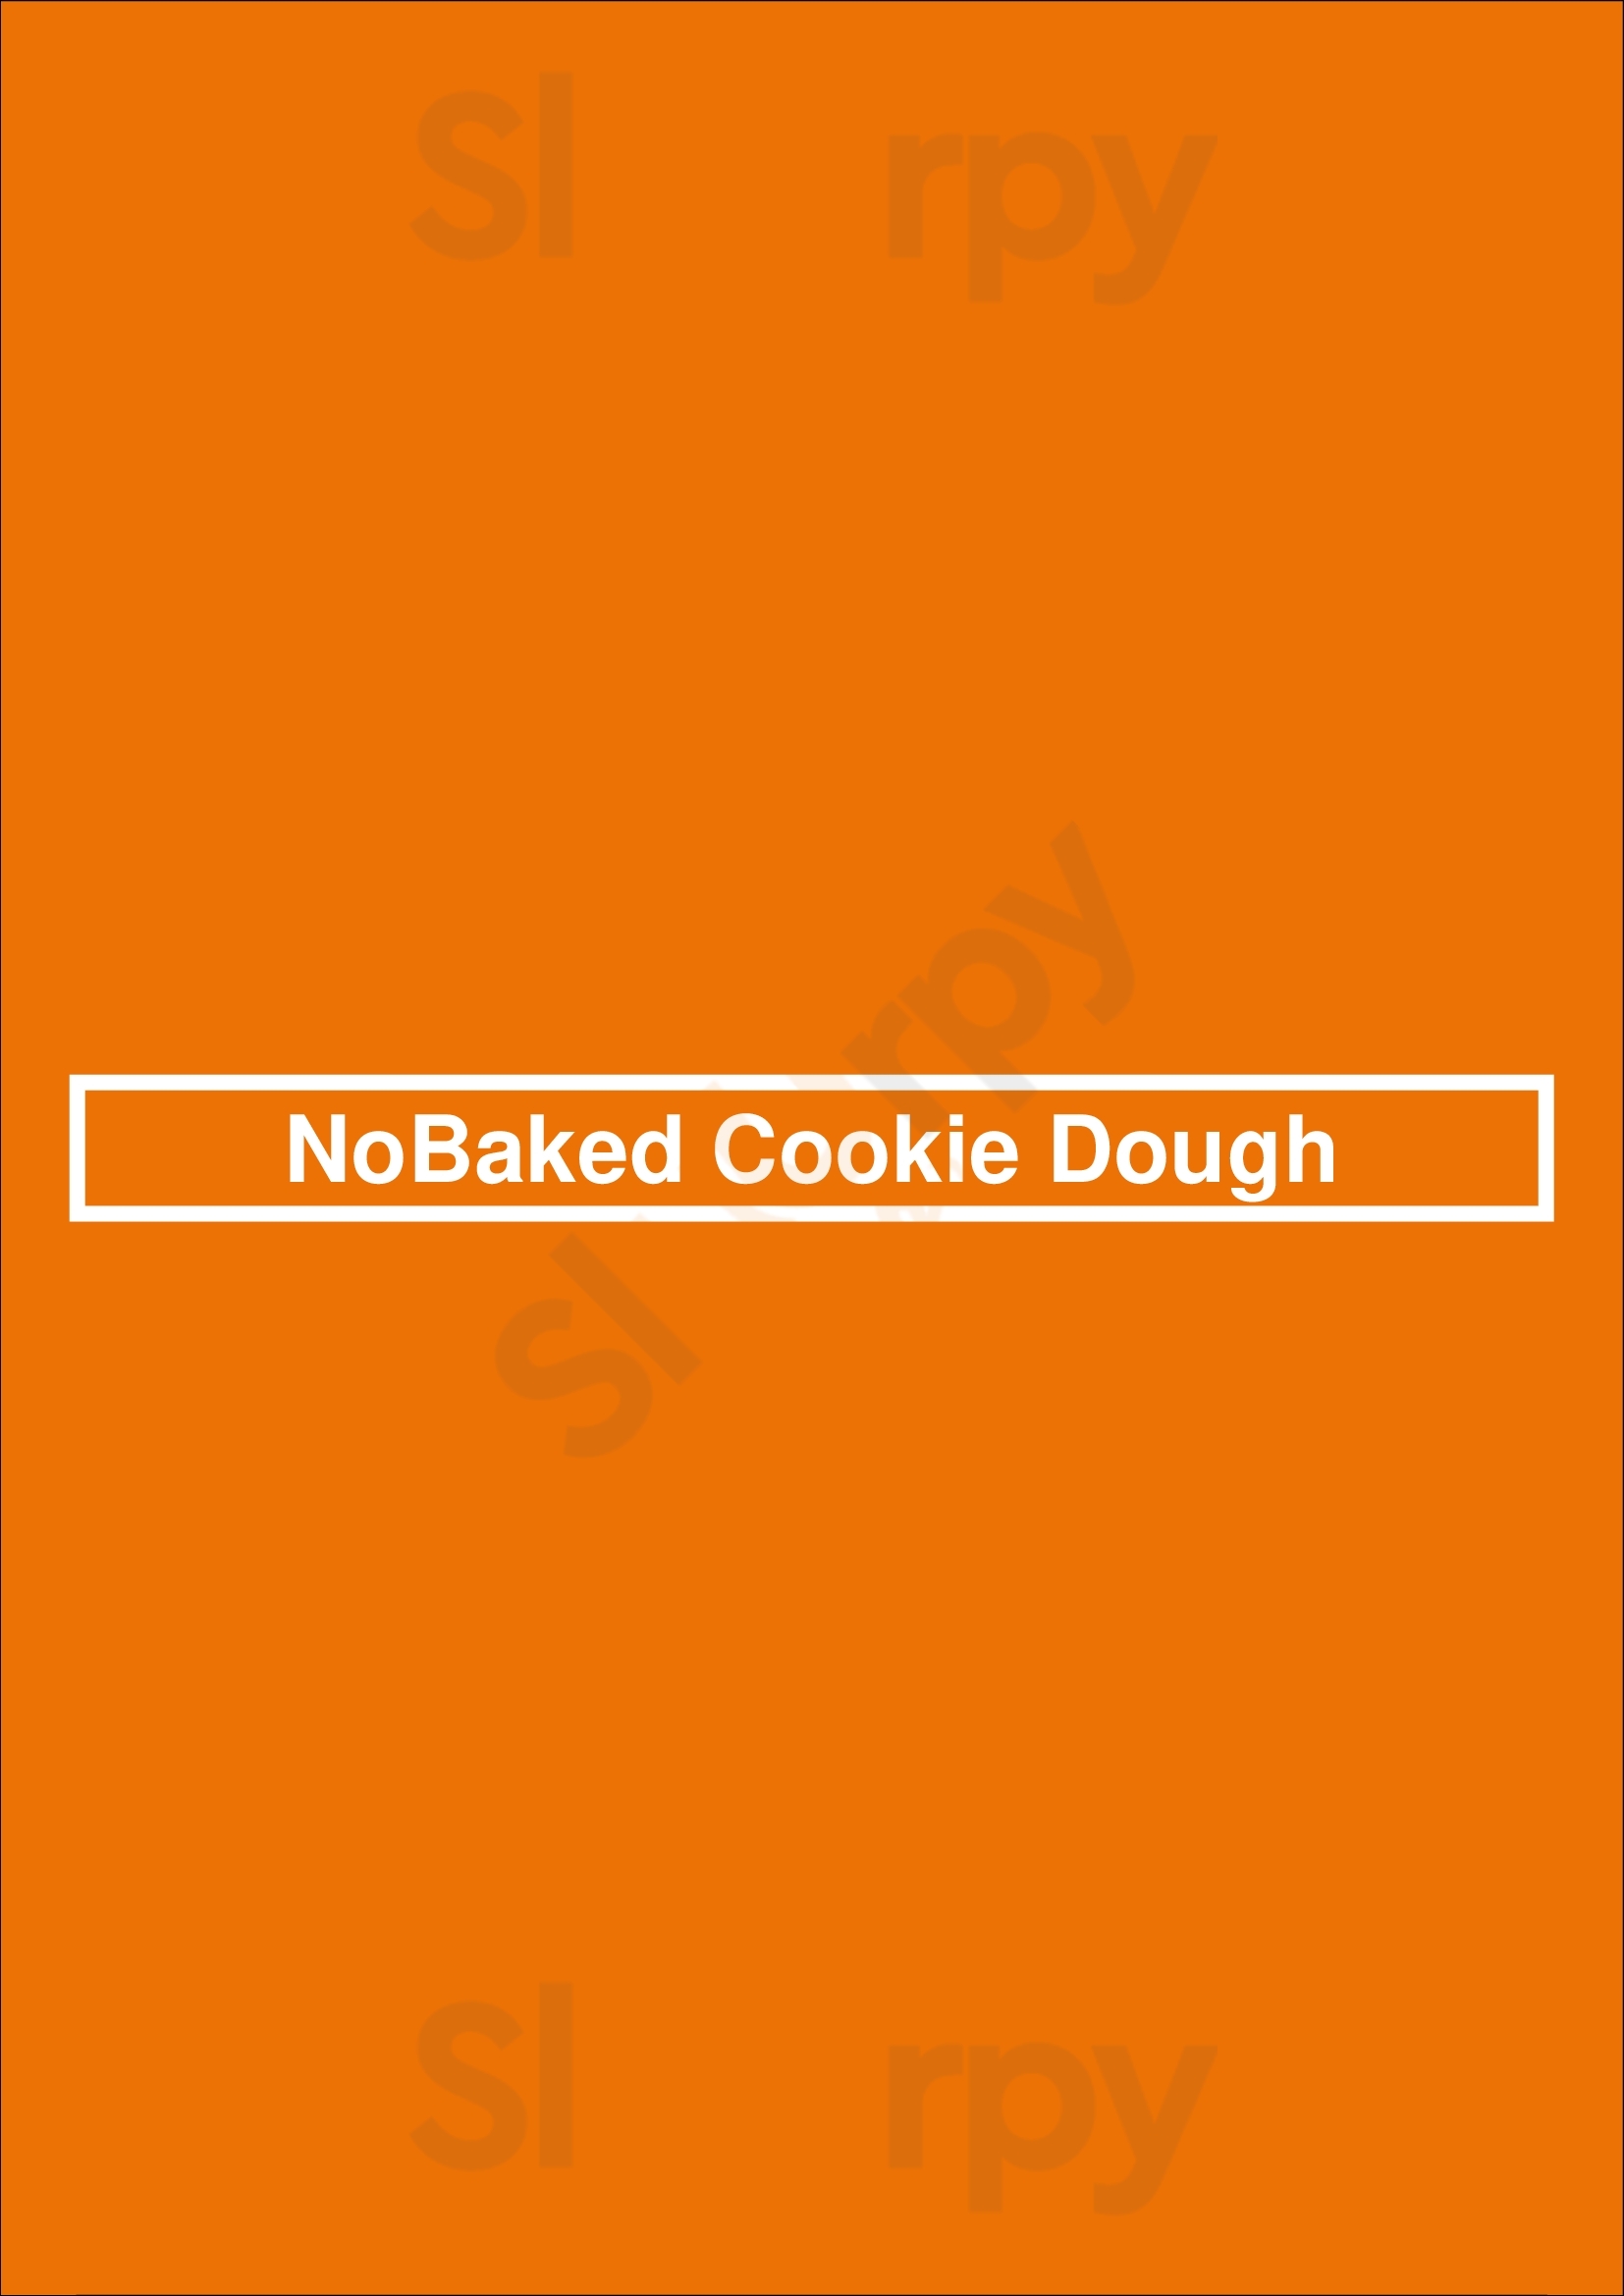 Nobaked Cookie Dough Chattanooga Menu - 1